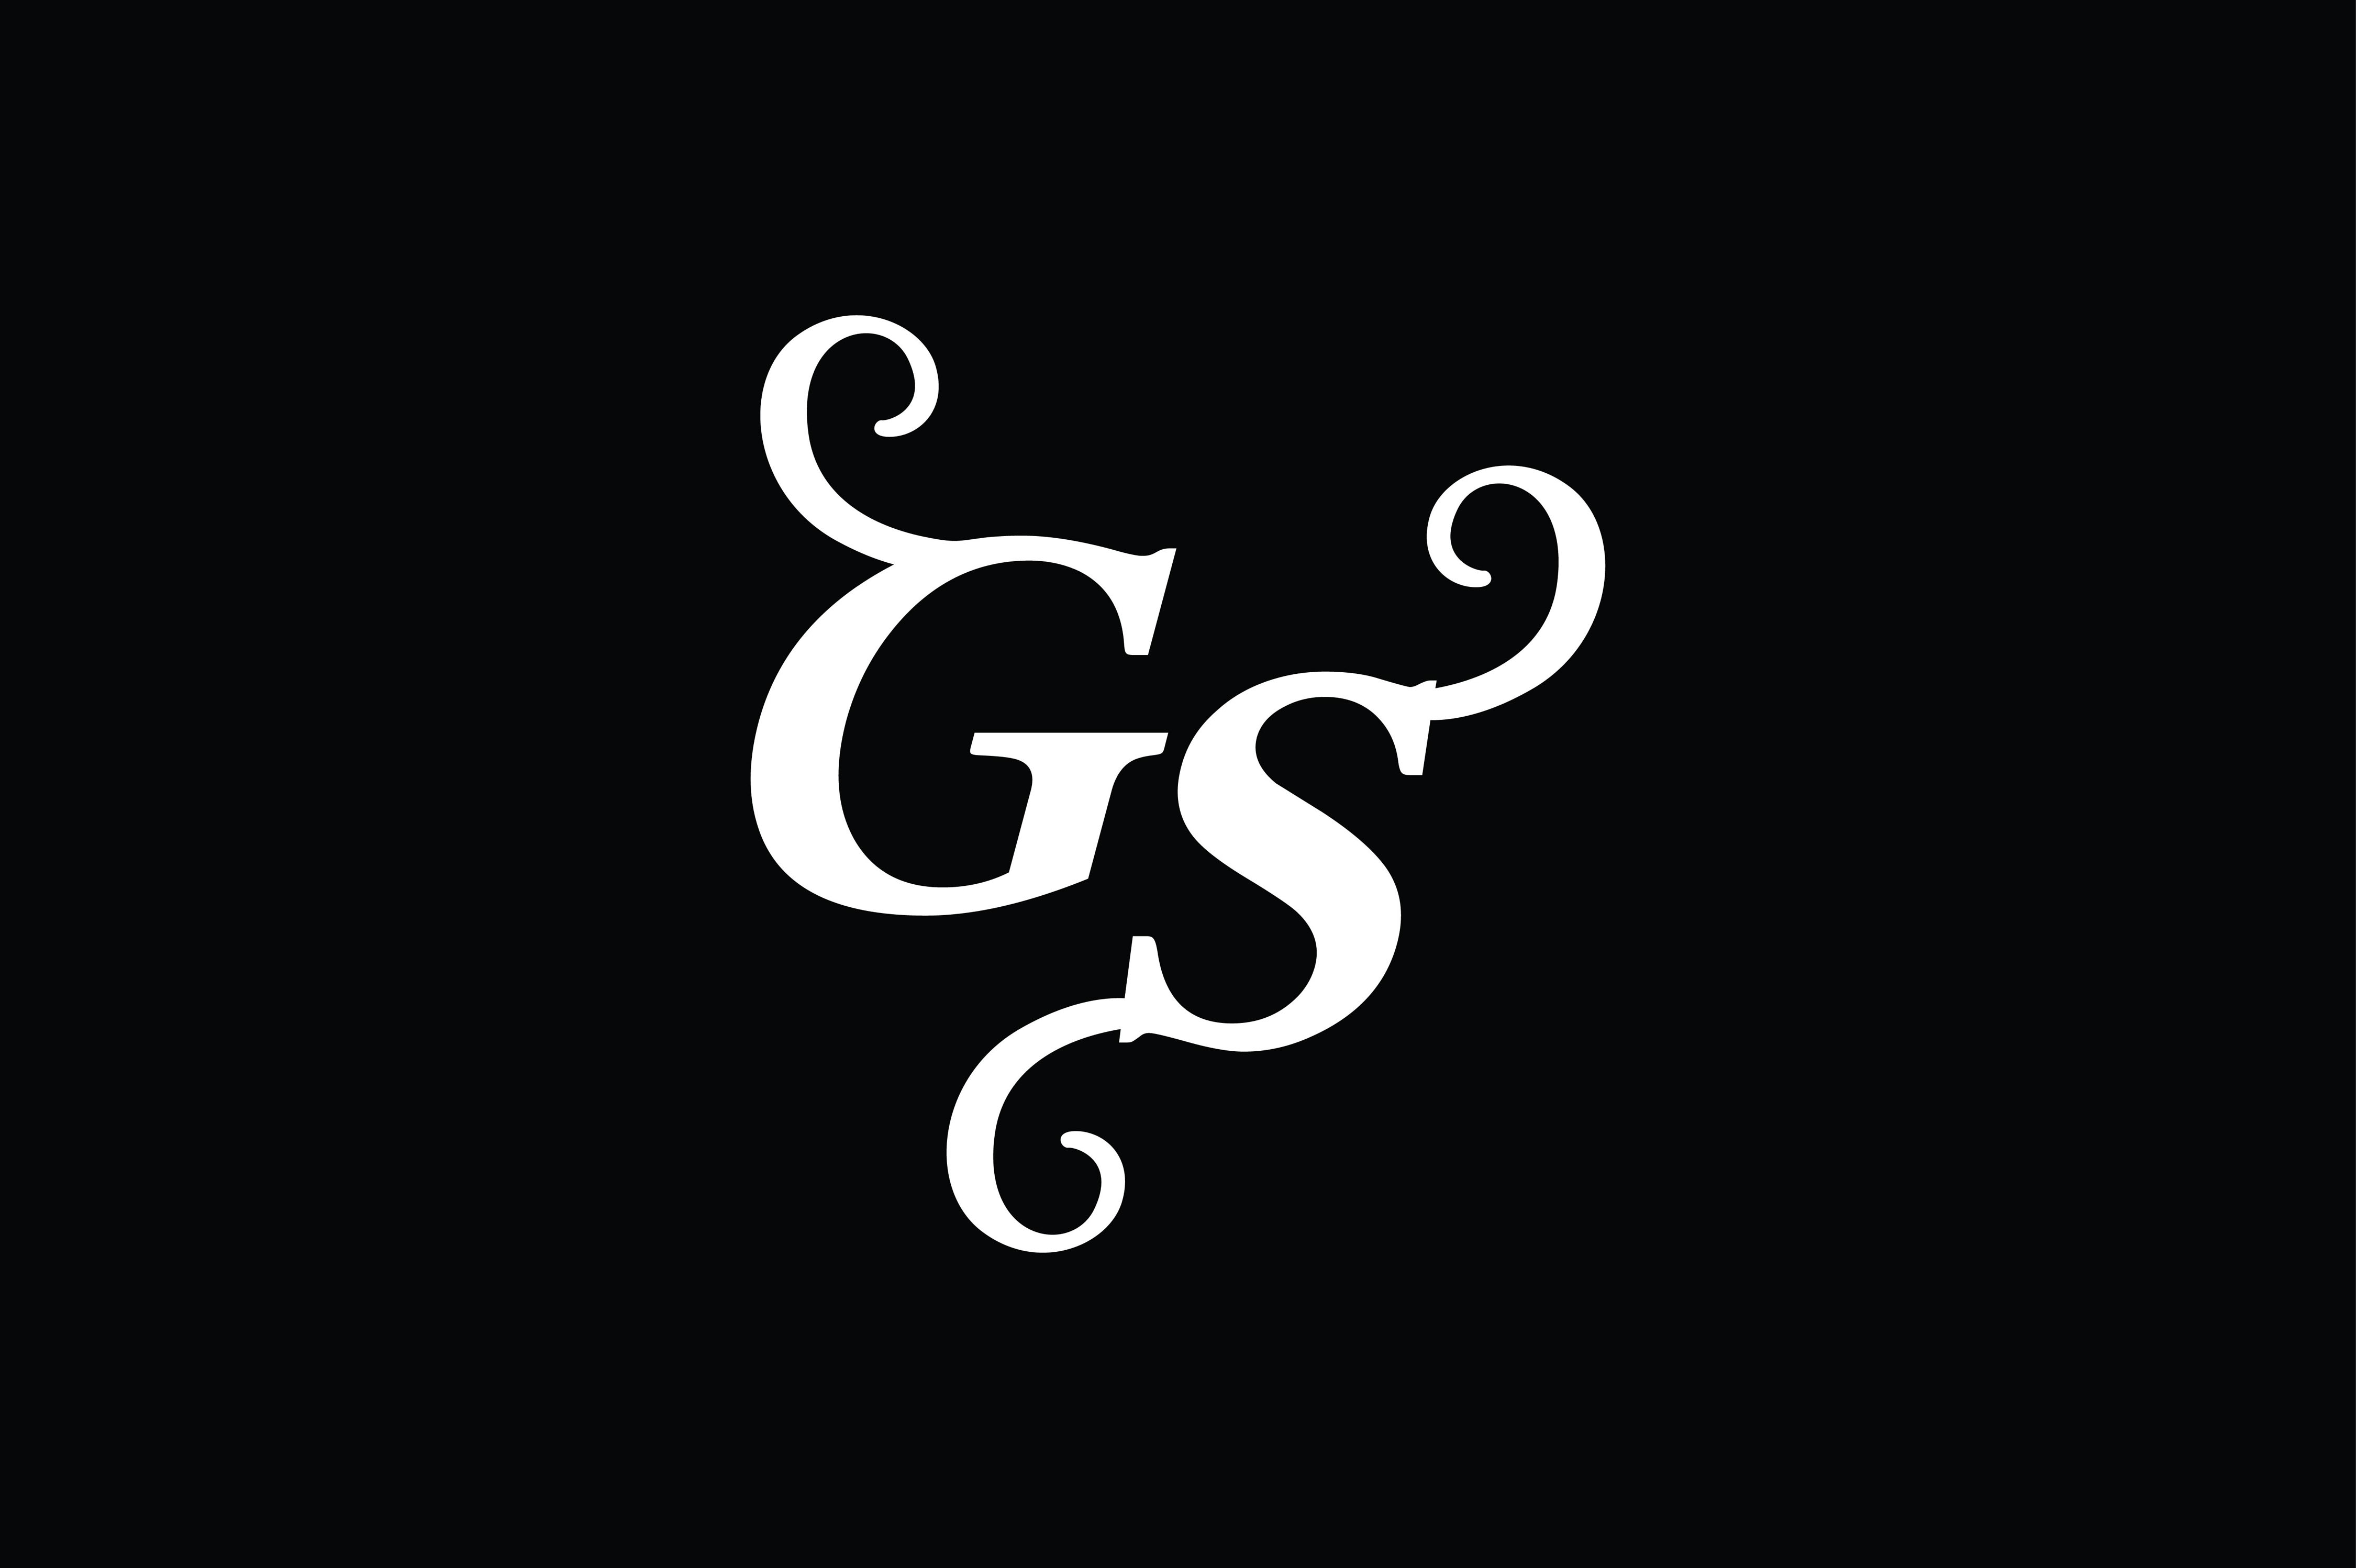 Monogram MG Logo V2 Graphic by Greenlines Studios · Creative Fabrica